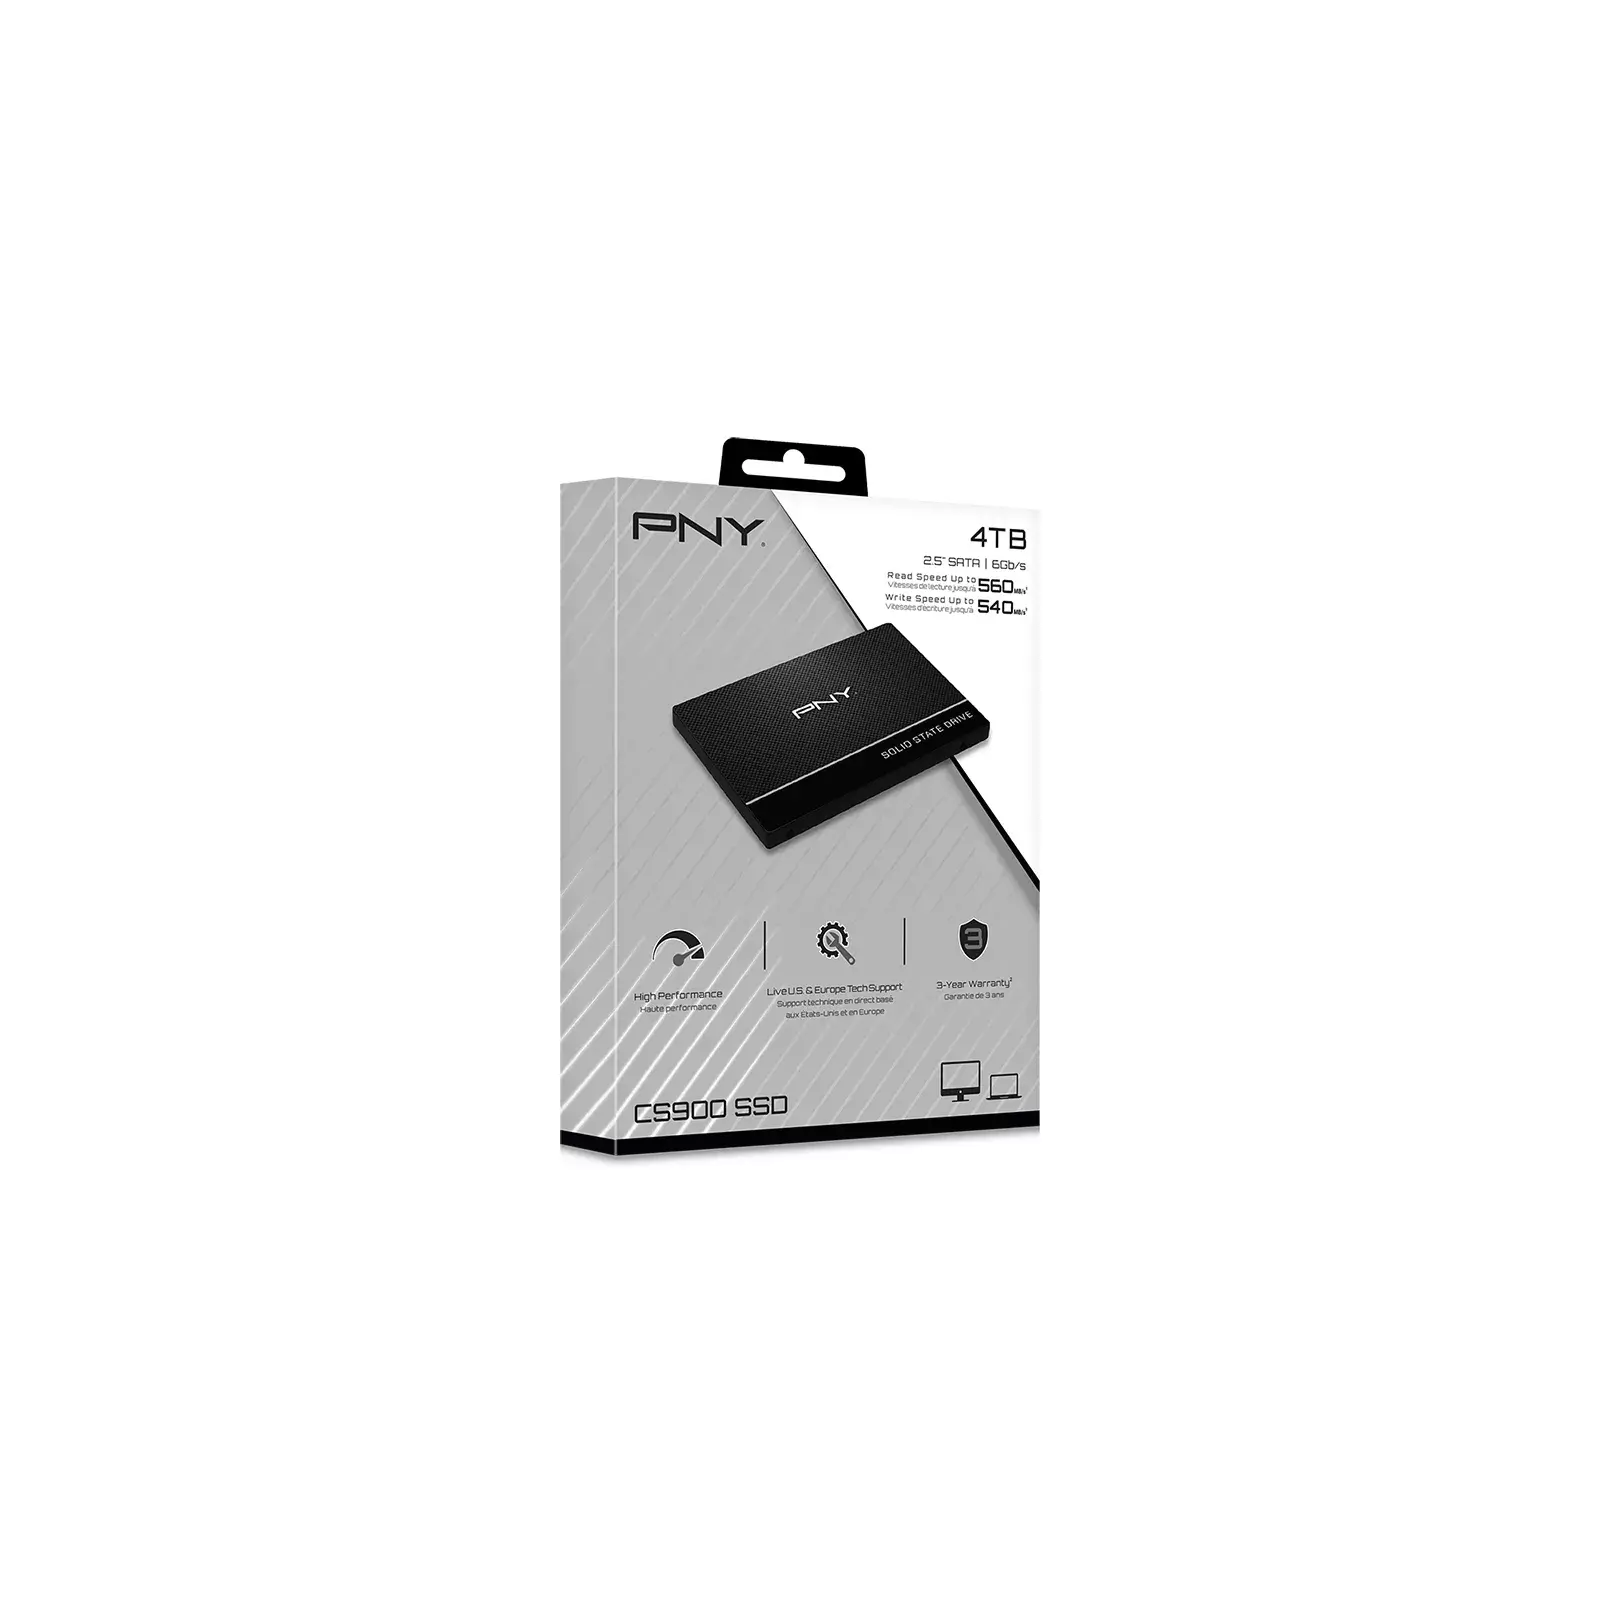 PNY SSD7CS900-4TB-RB Photo 4